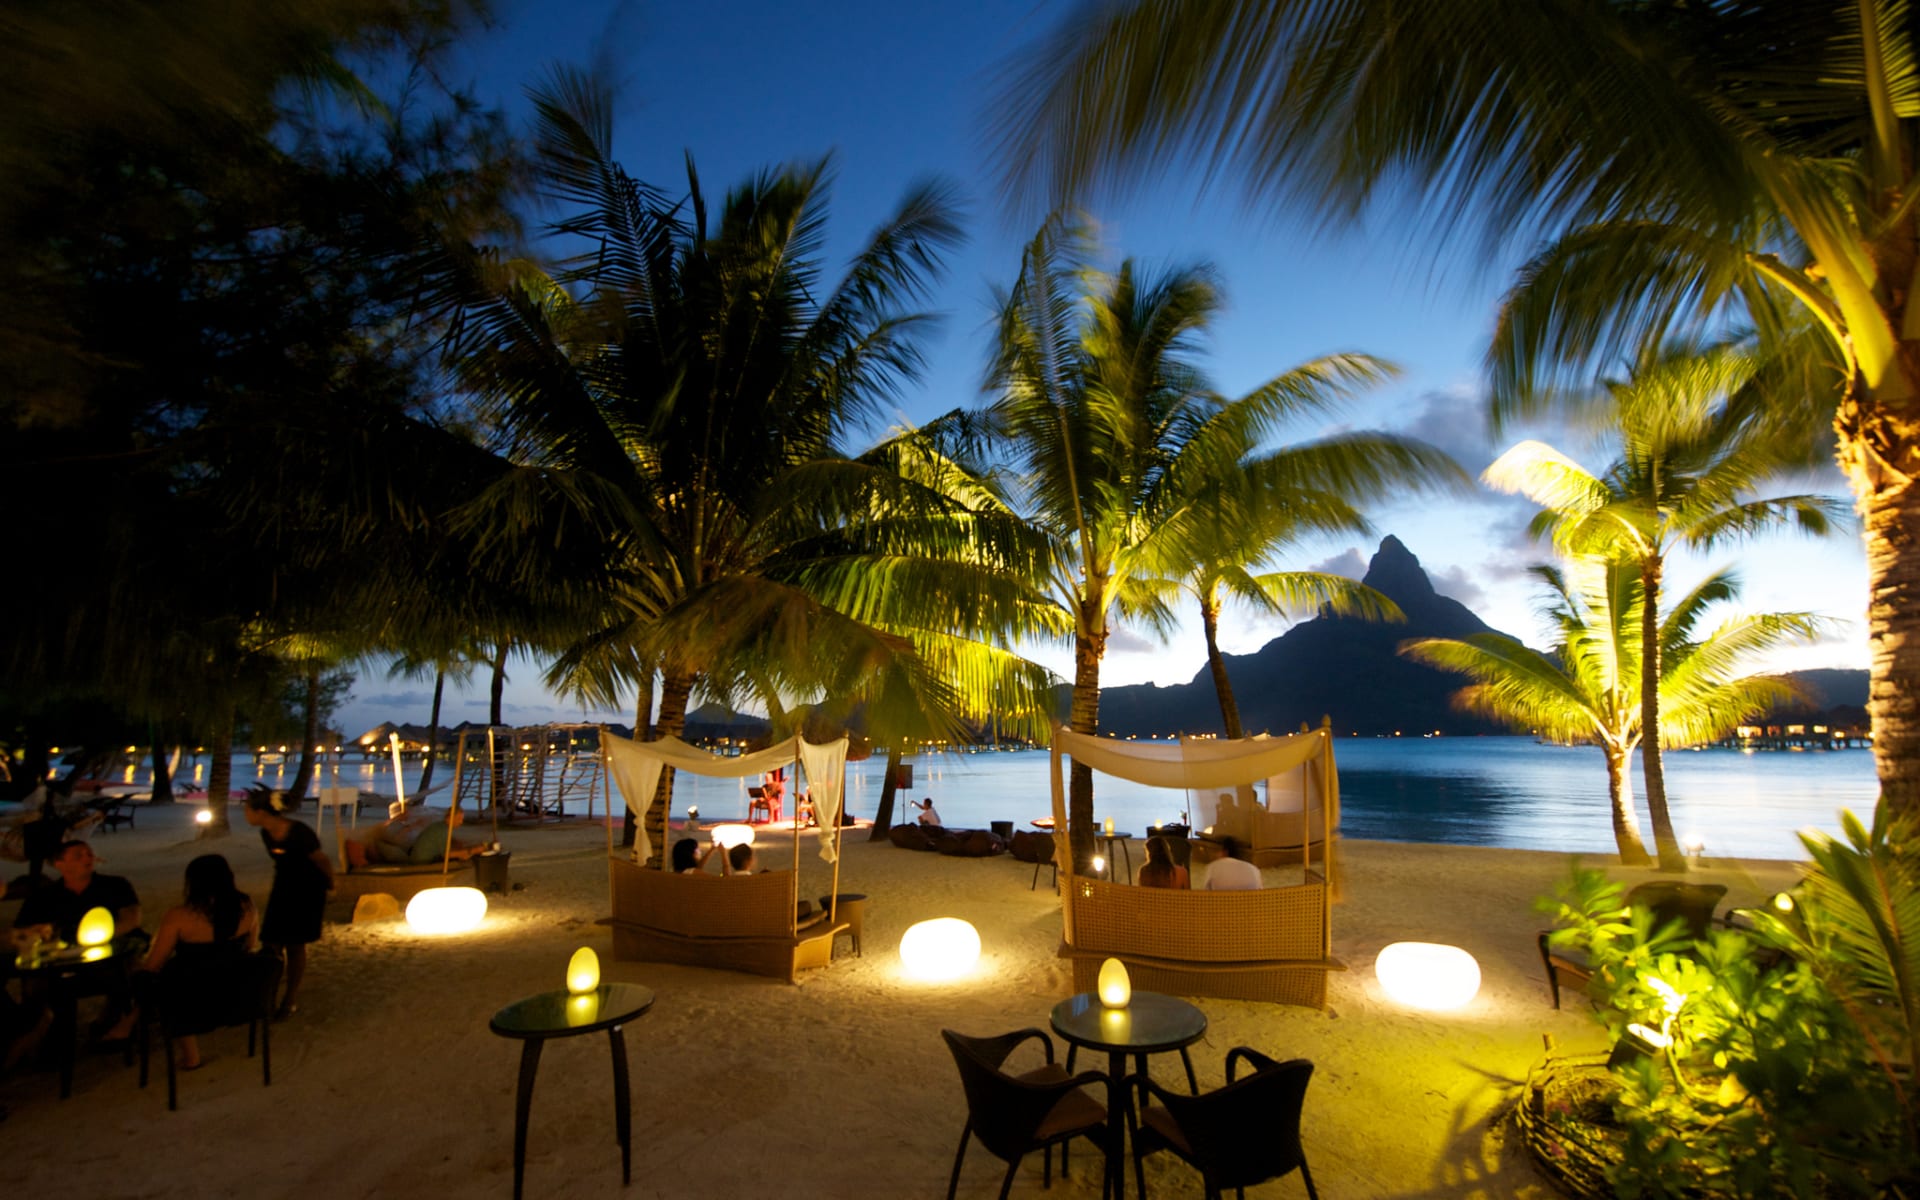 The beach has palm trees, tables, cabanas and lantern lighting. 